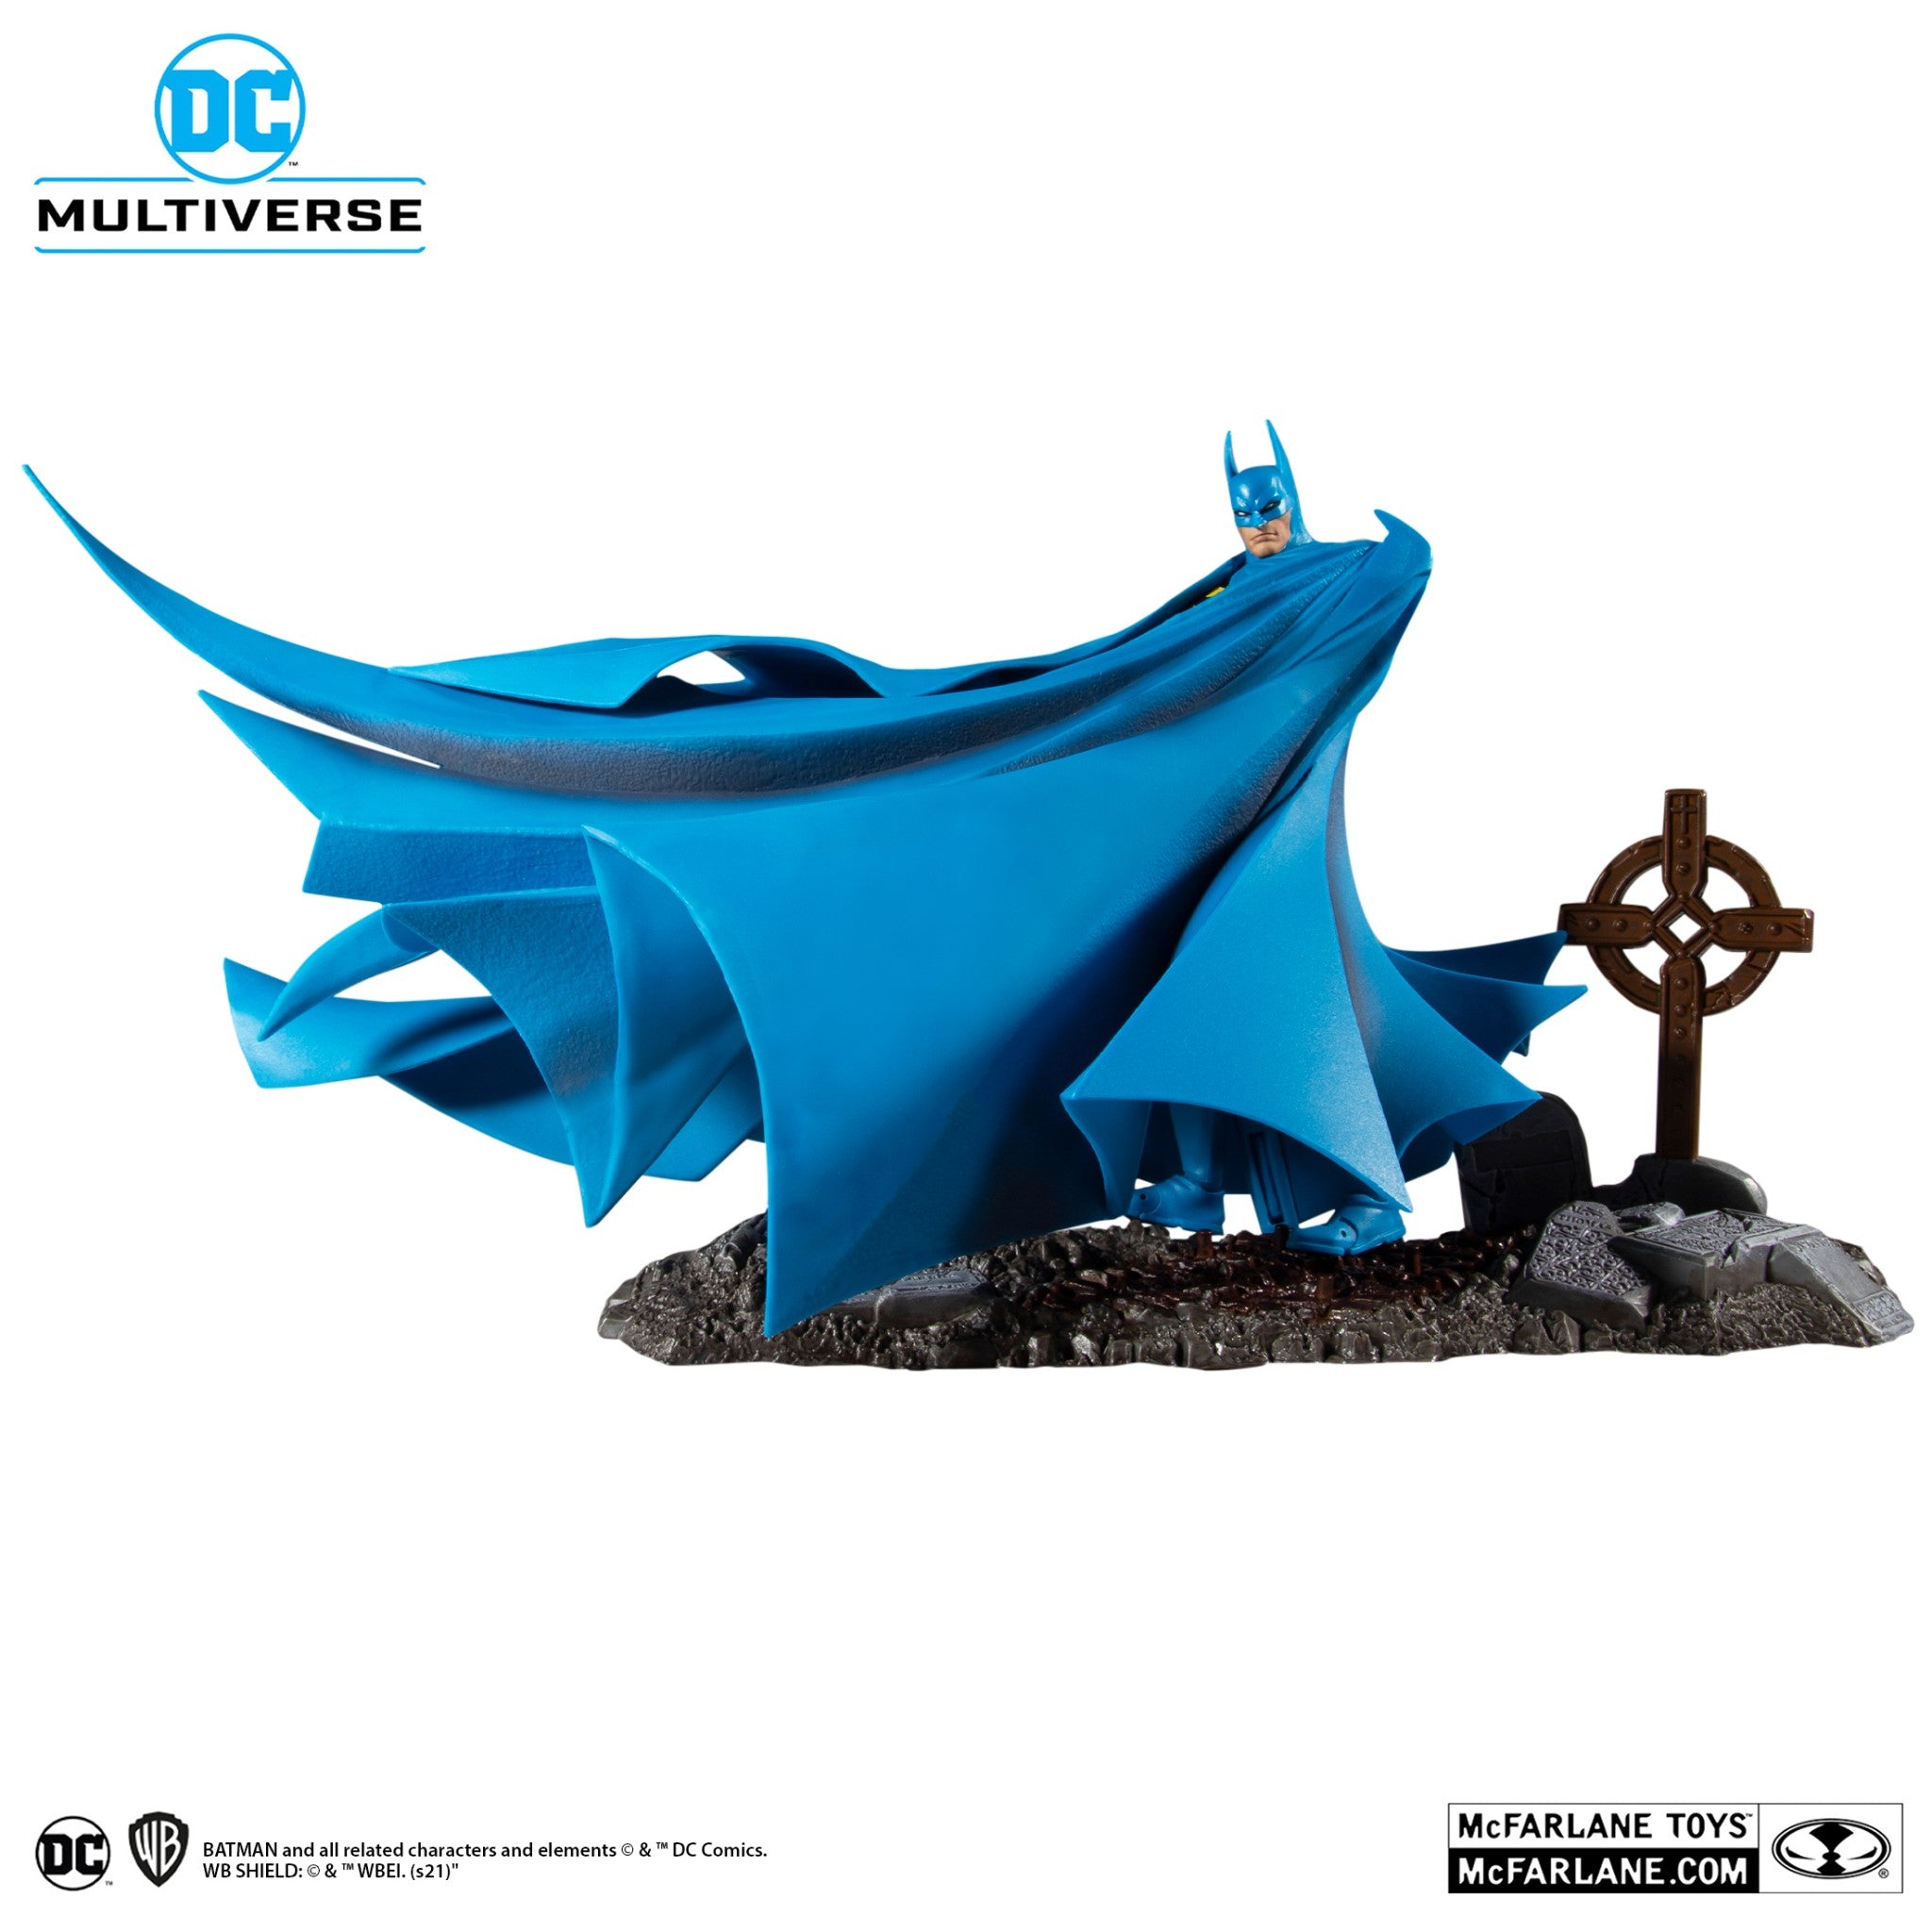 DC Multiverse Batman Year Two 2 Gold Label Designer Edition - McFarlane Toys